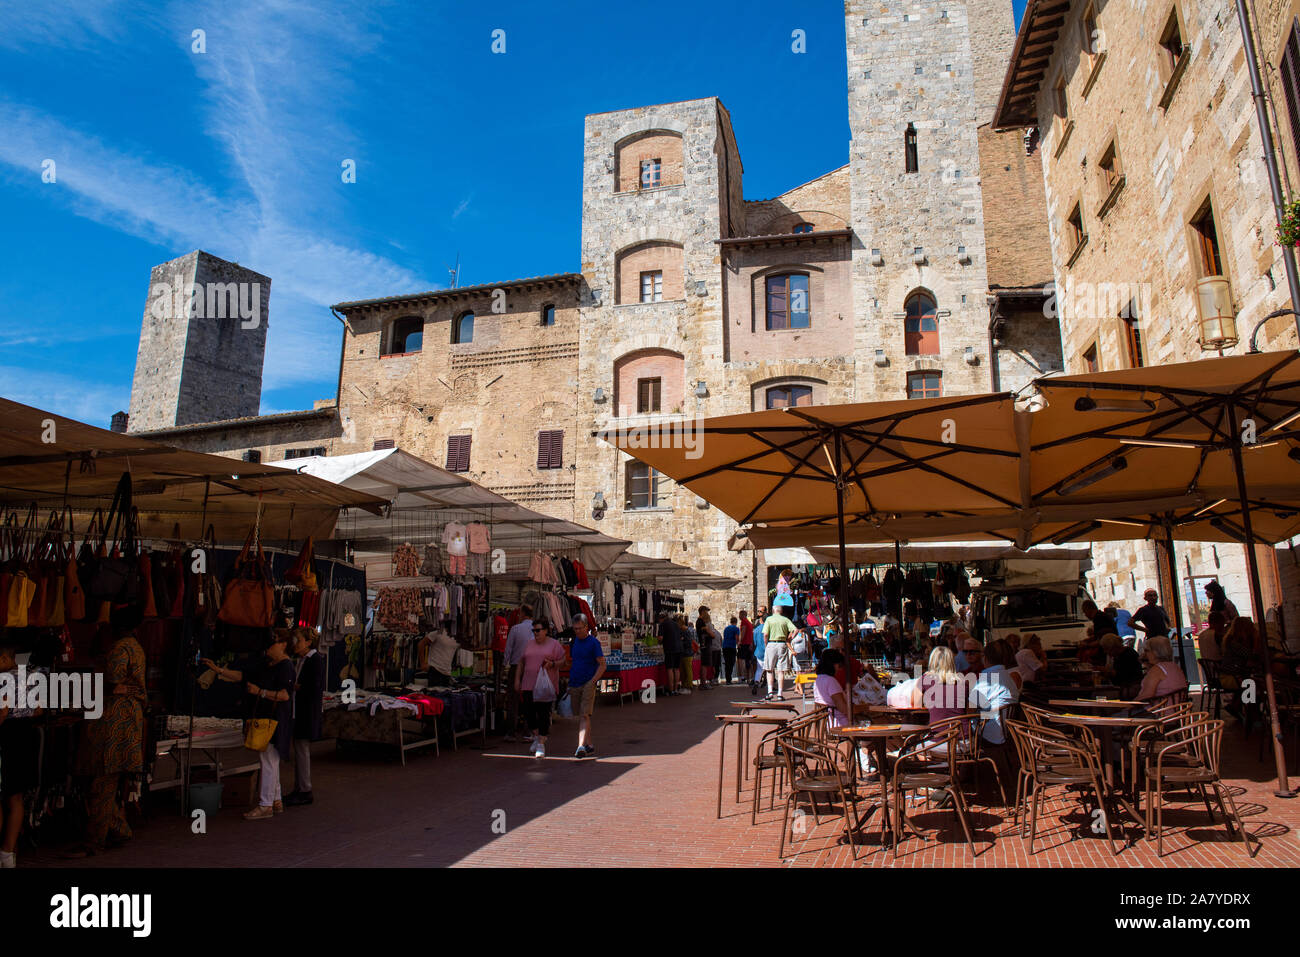 A sunny summer market day in the hill town of San Gimignano, Tuscany Italy Europe EU Stock Photo